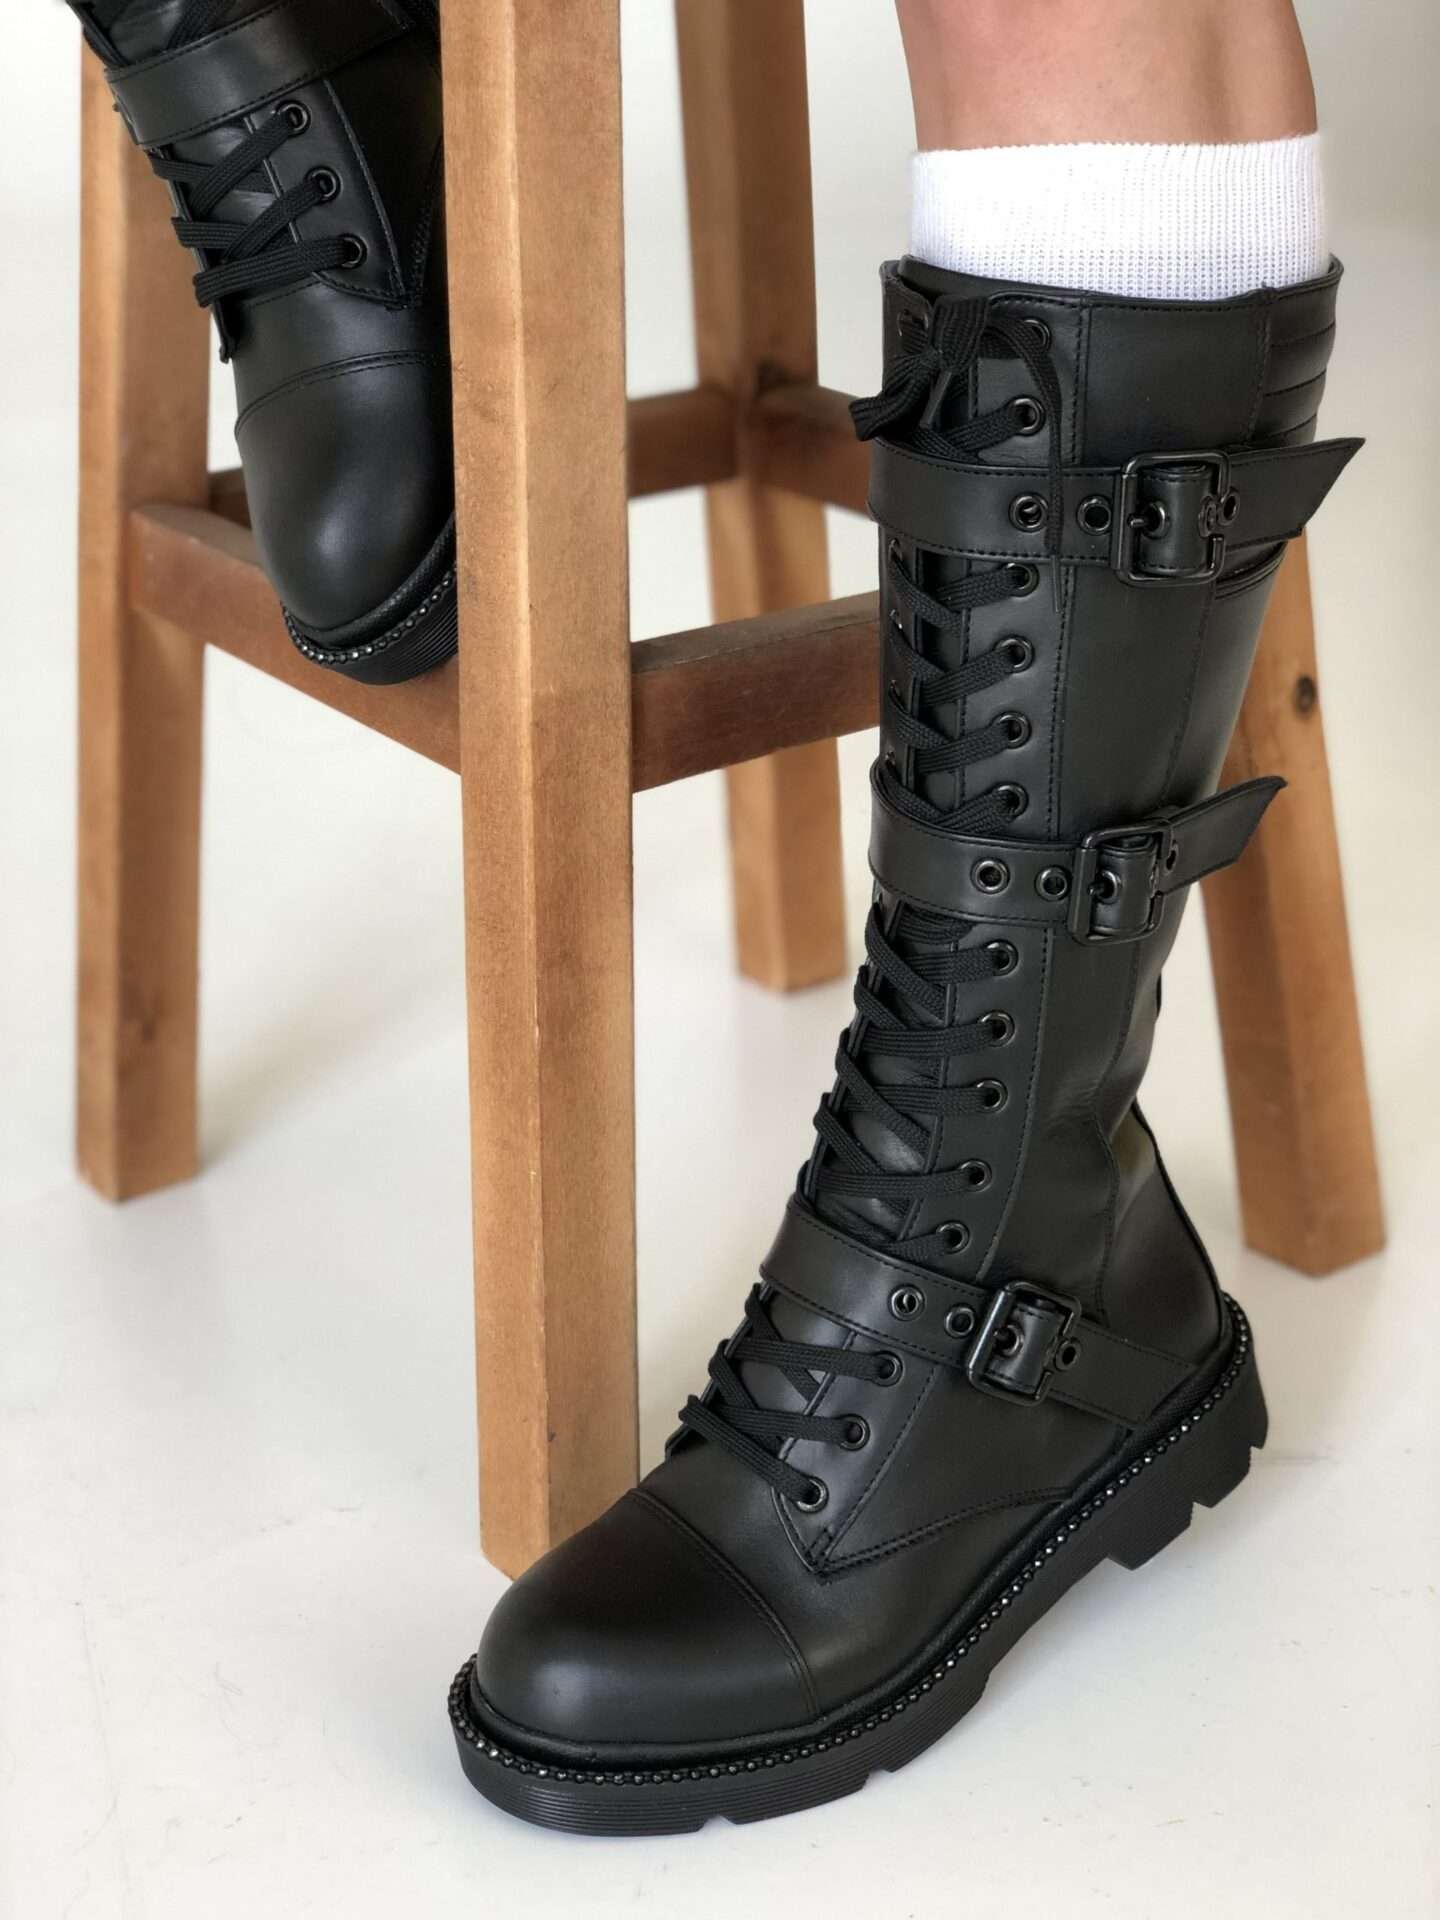 Knee high combat boots with buckles for women buy online ...